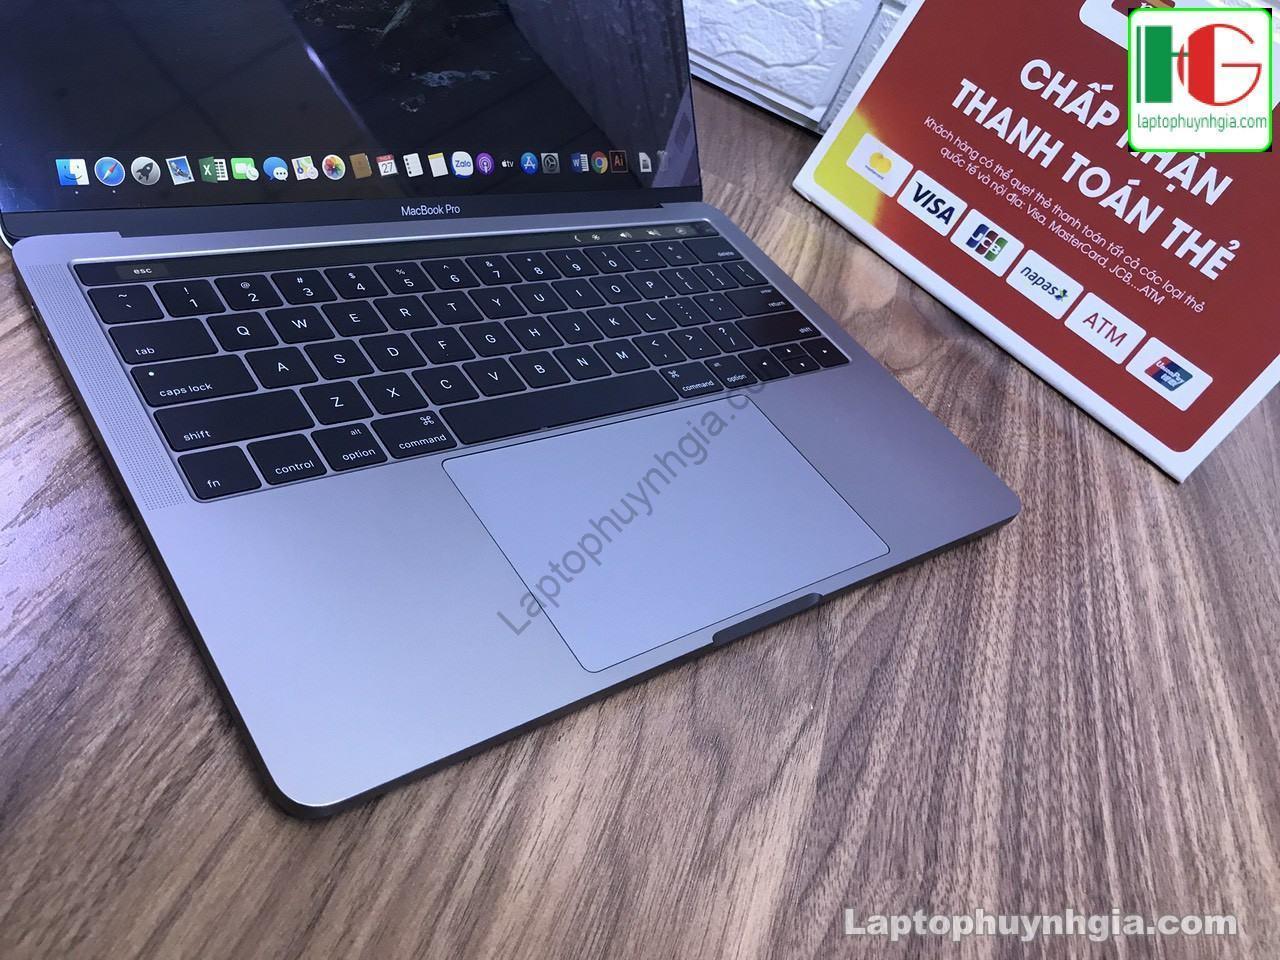 Macbook Pro 2016 I5 8g Ssd 256g Lcd 13 Laptopcubinhduong.vn 5